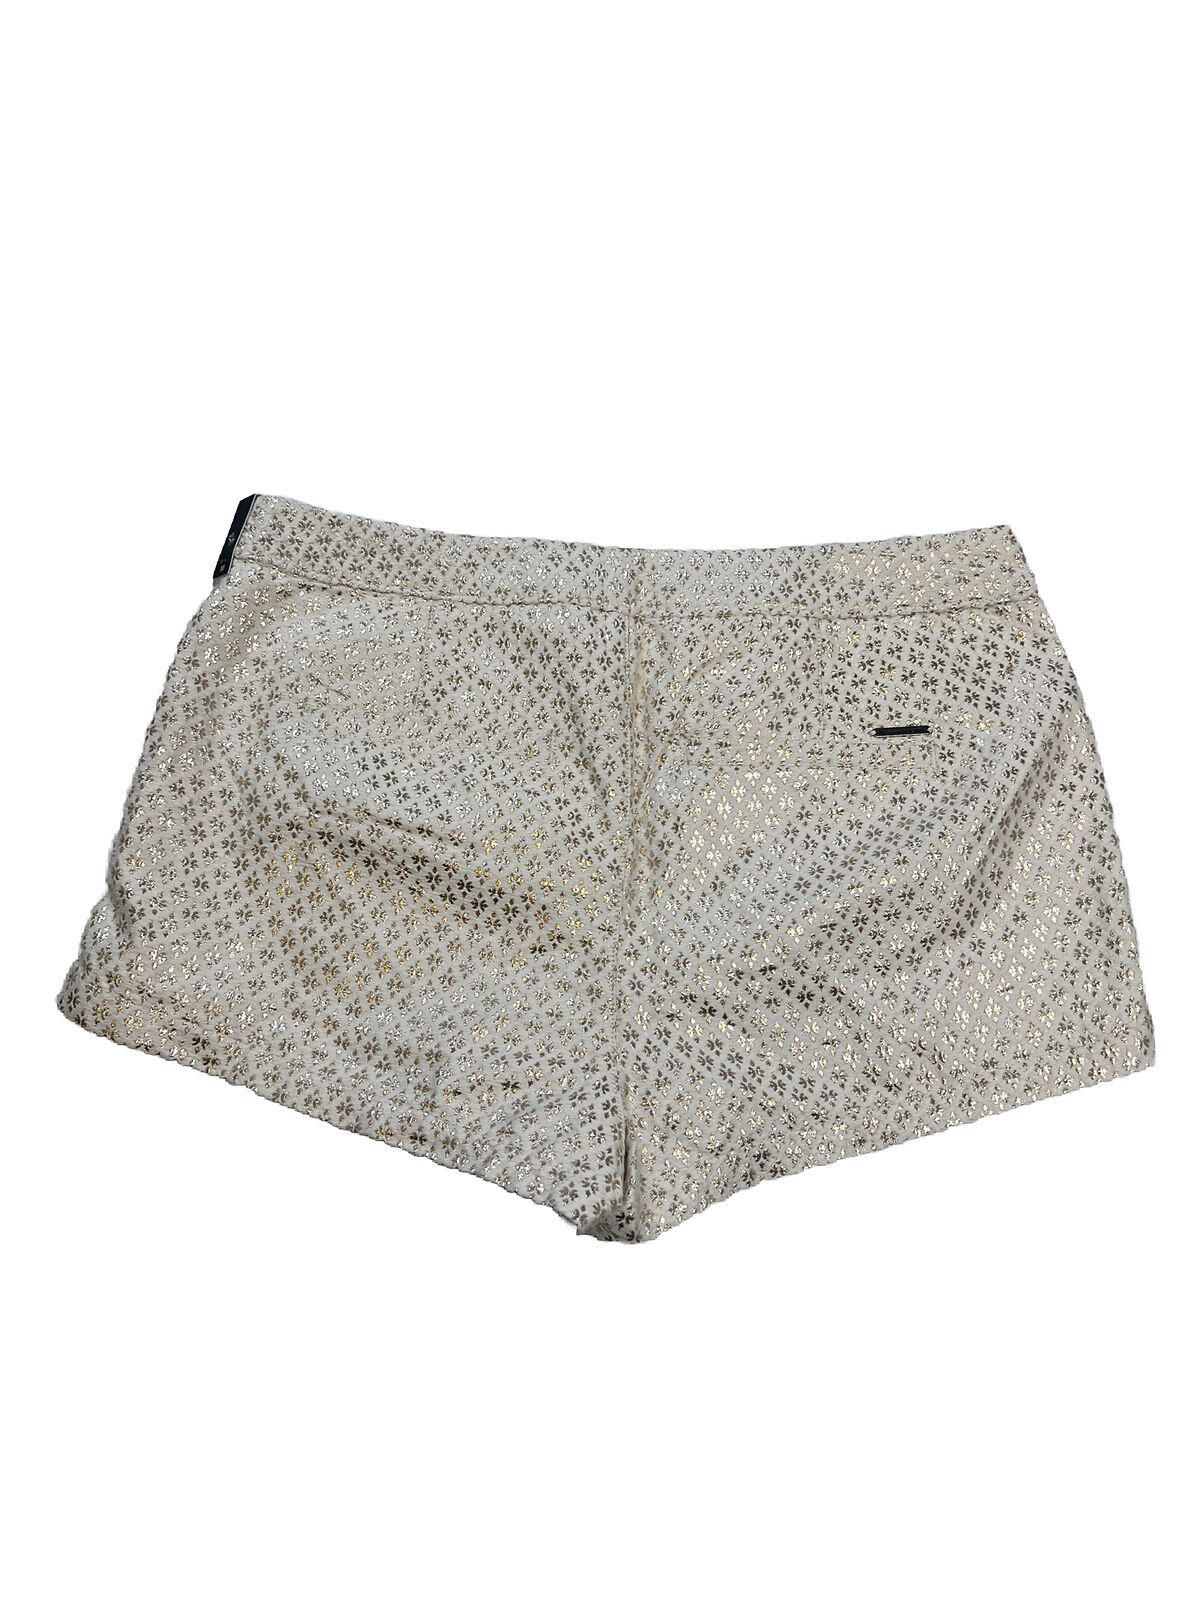 NUEVOS pantalones cortos metálicos dorados para mujer de Abercrombie and Fitch - 10